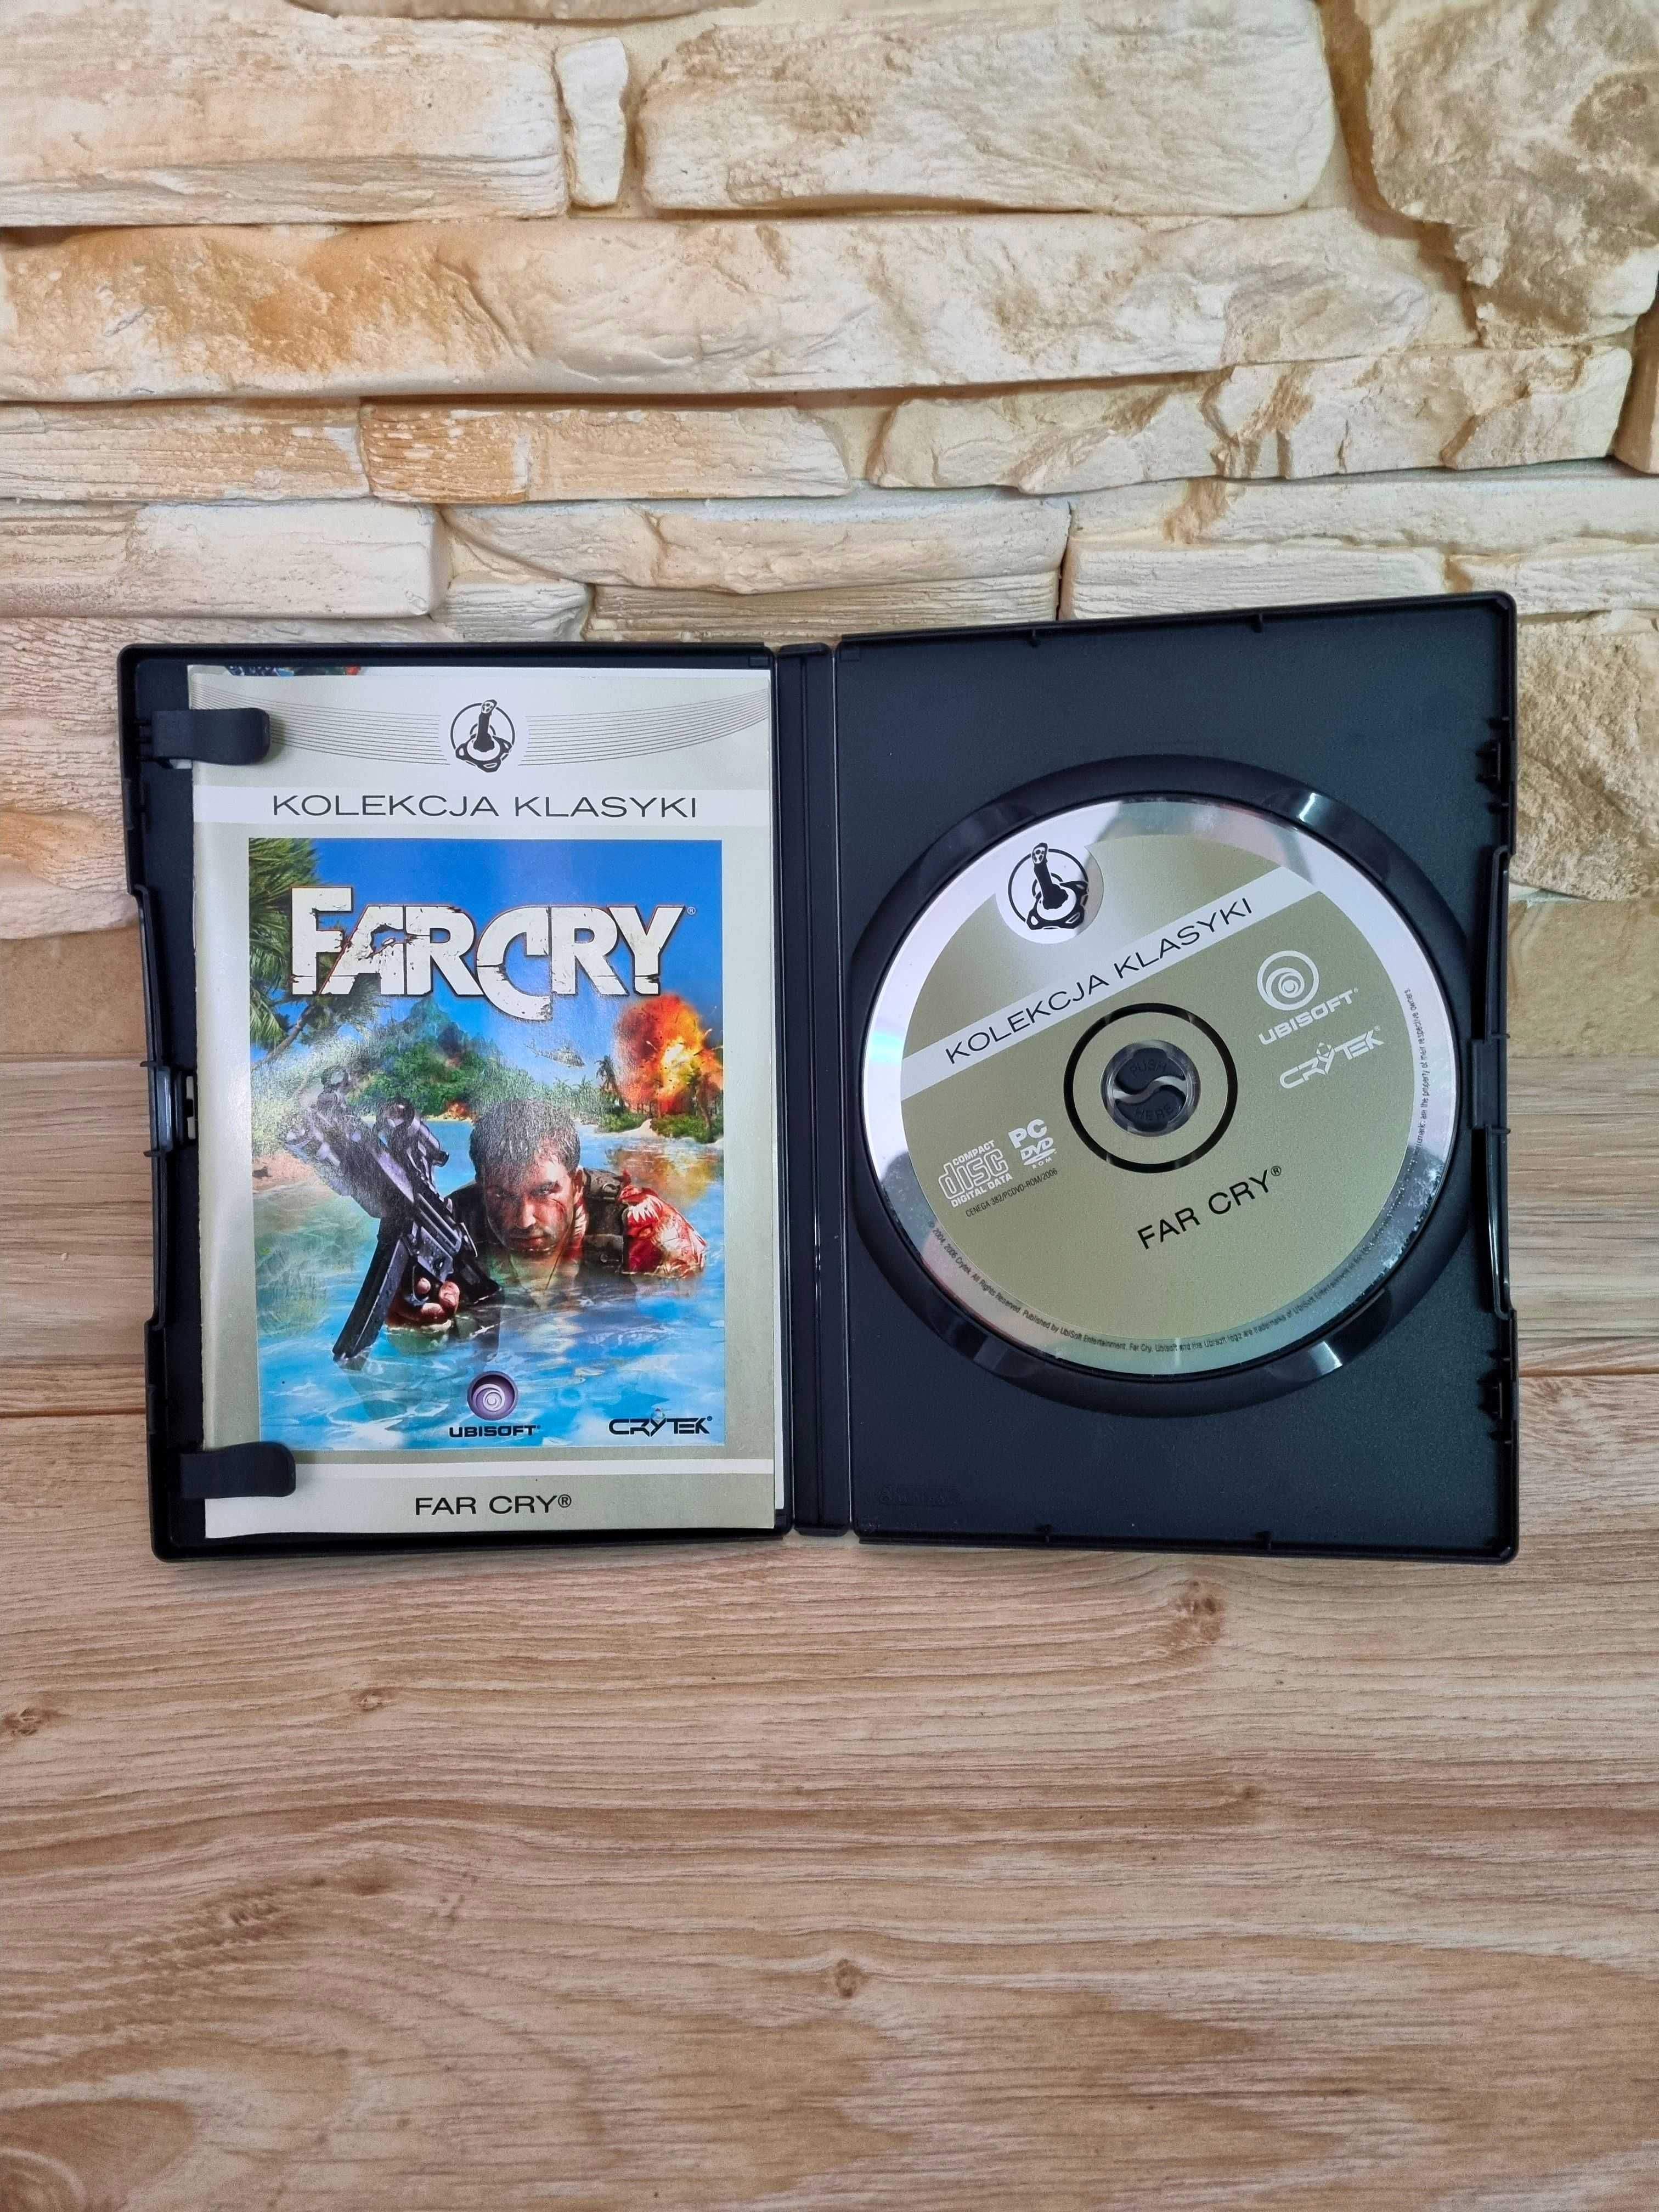 FarCry kolekcja klasyki PC PL wersja